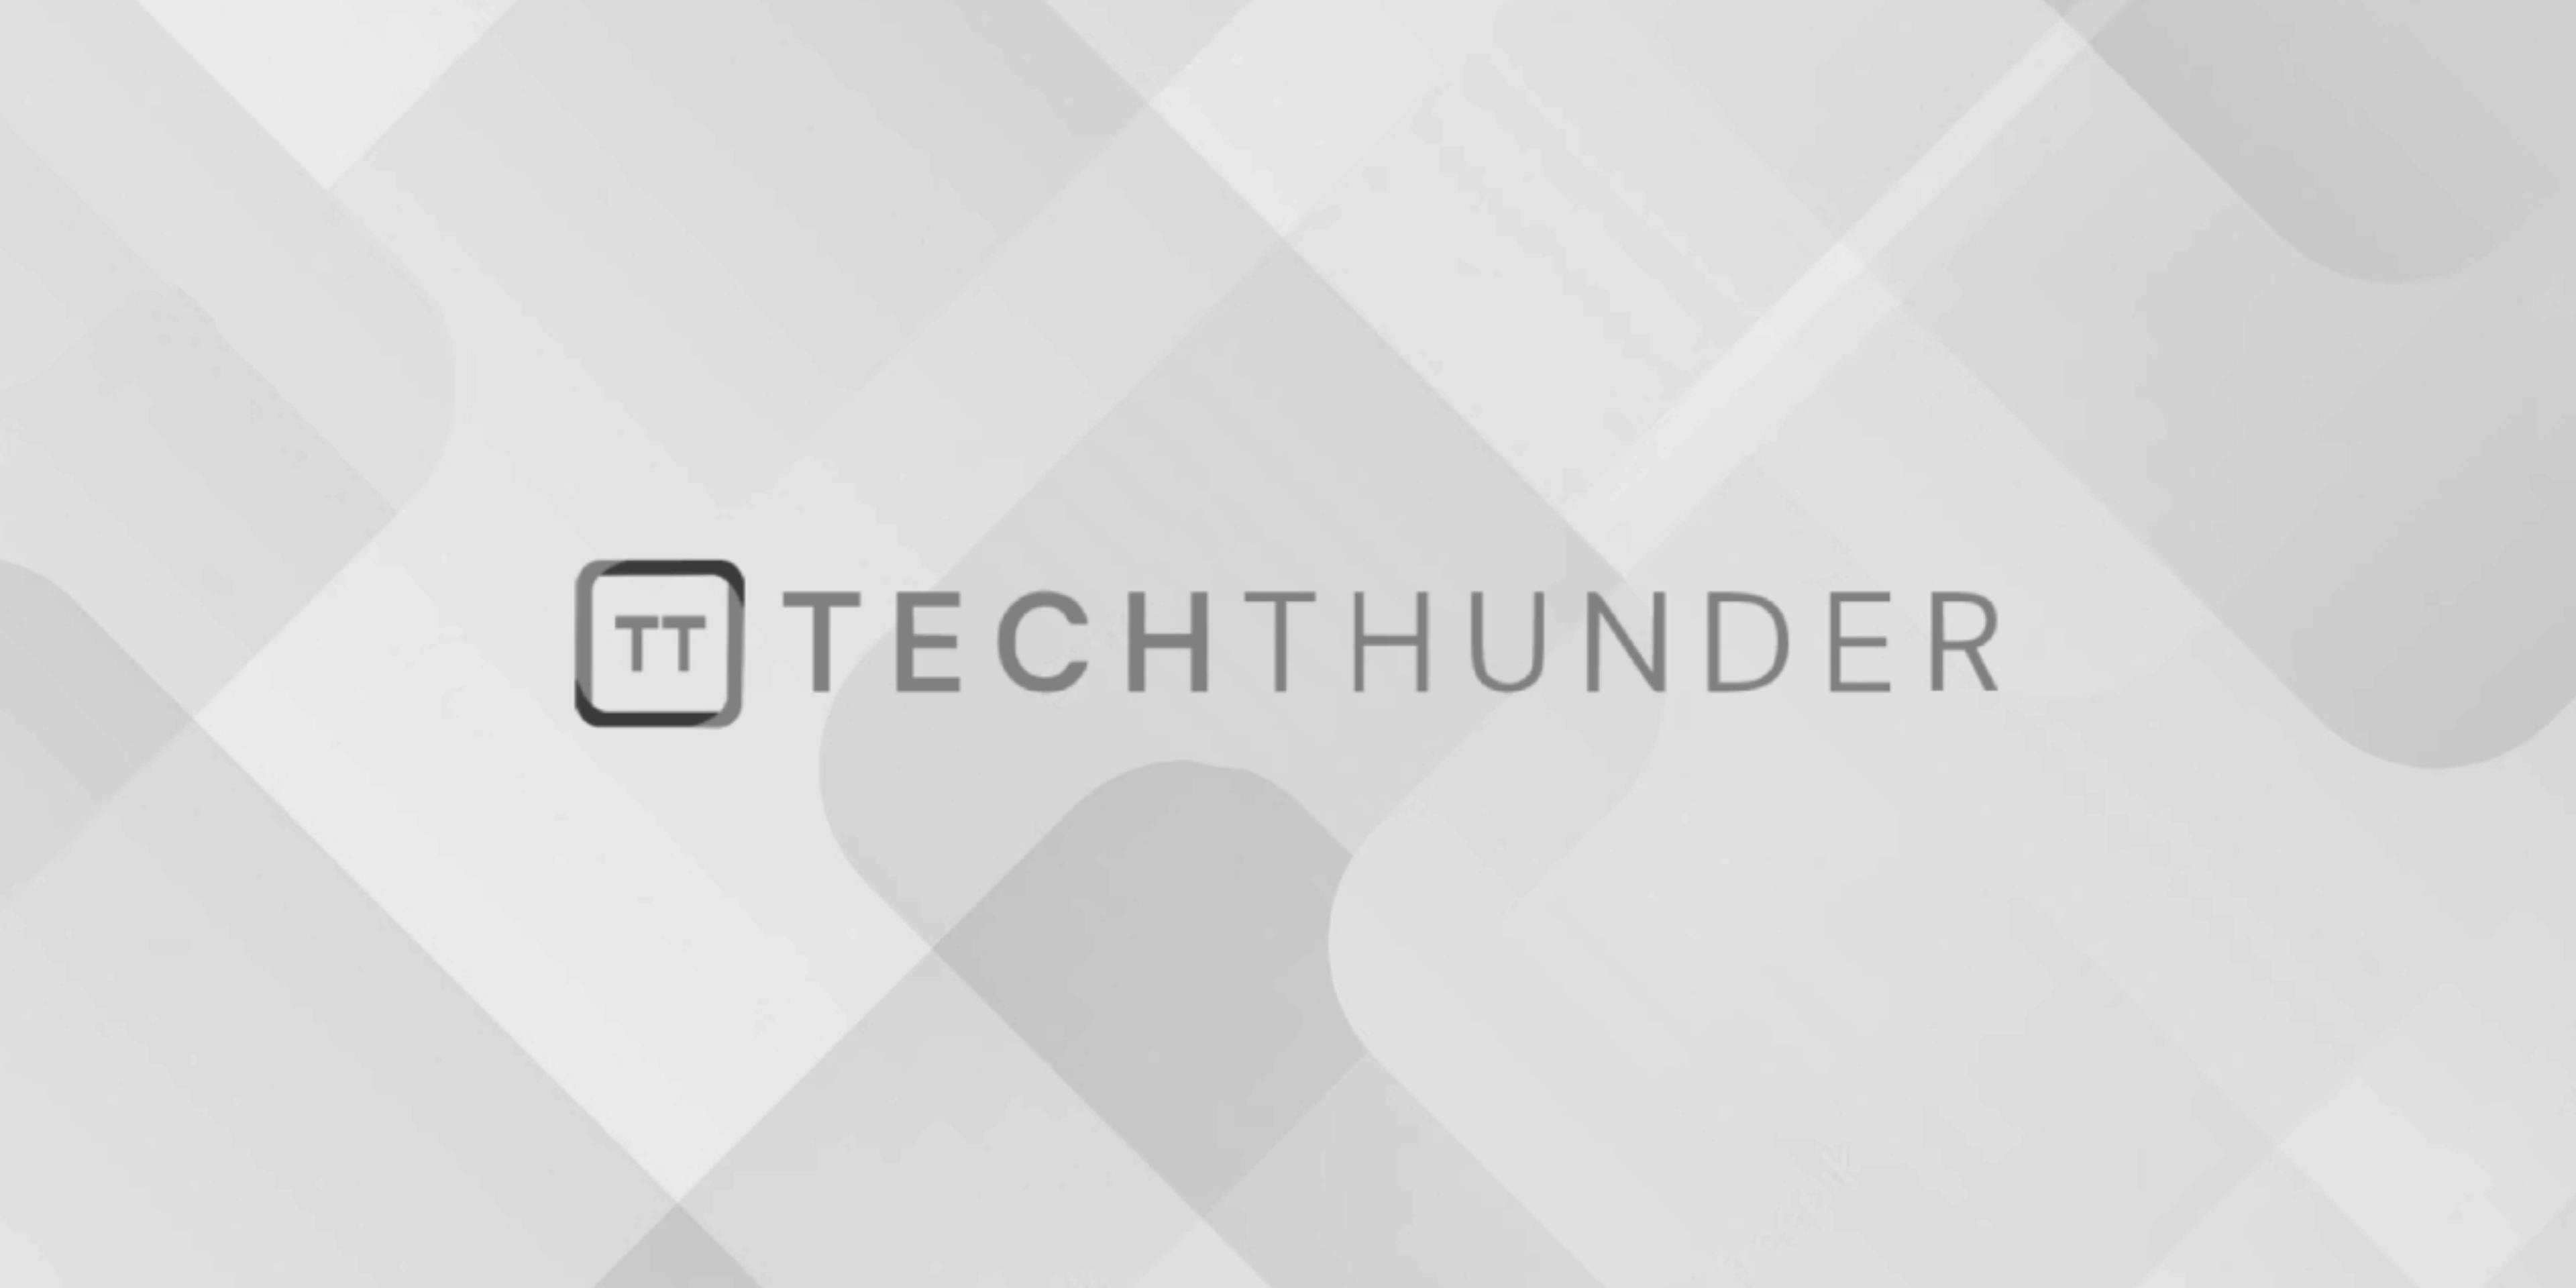 The Tech Thunder